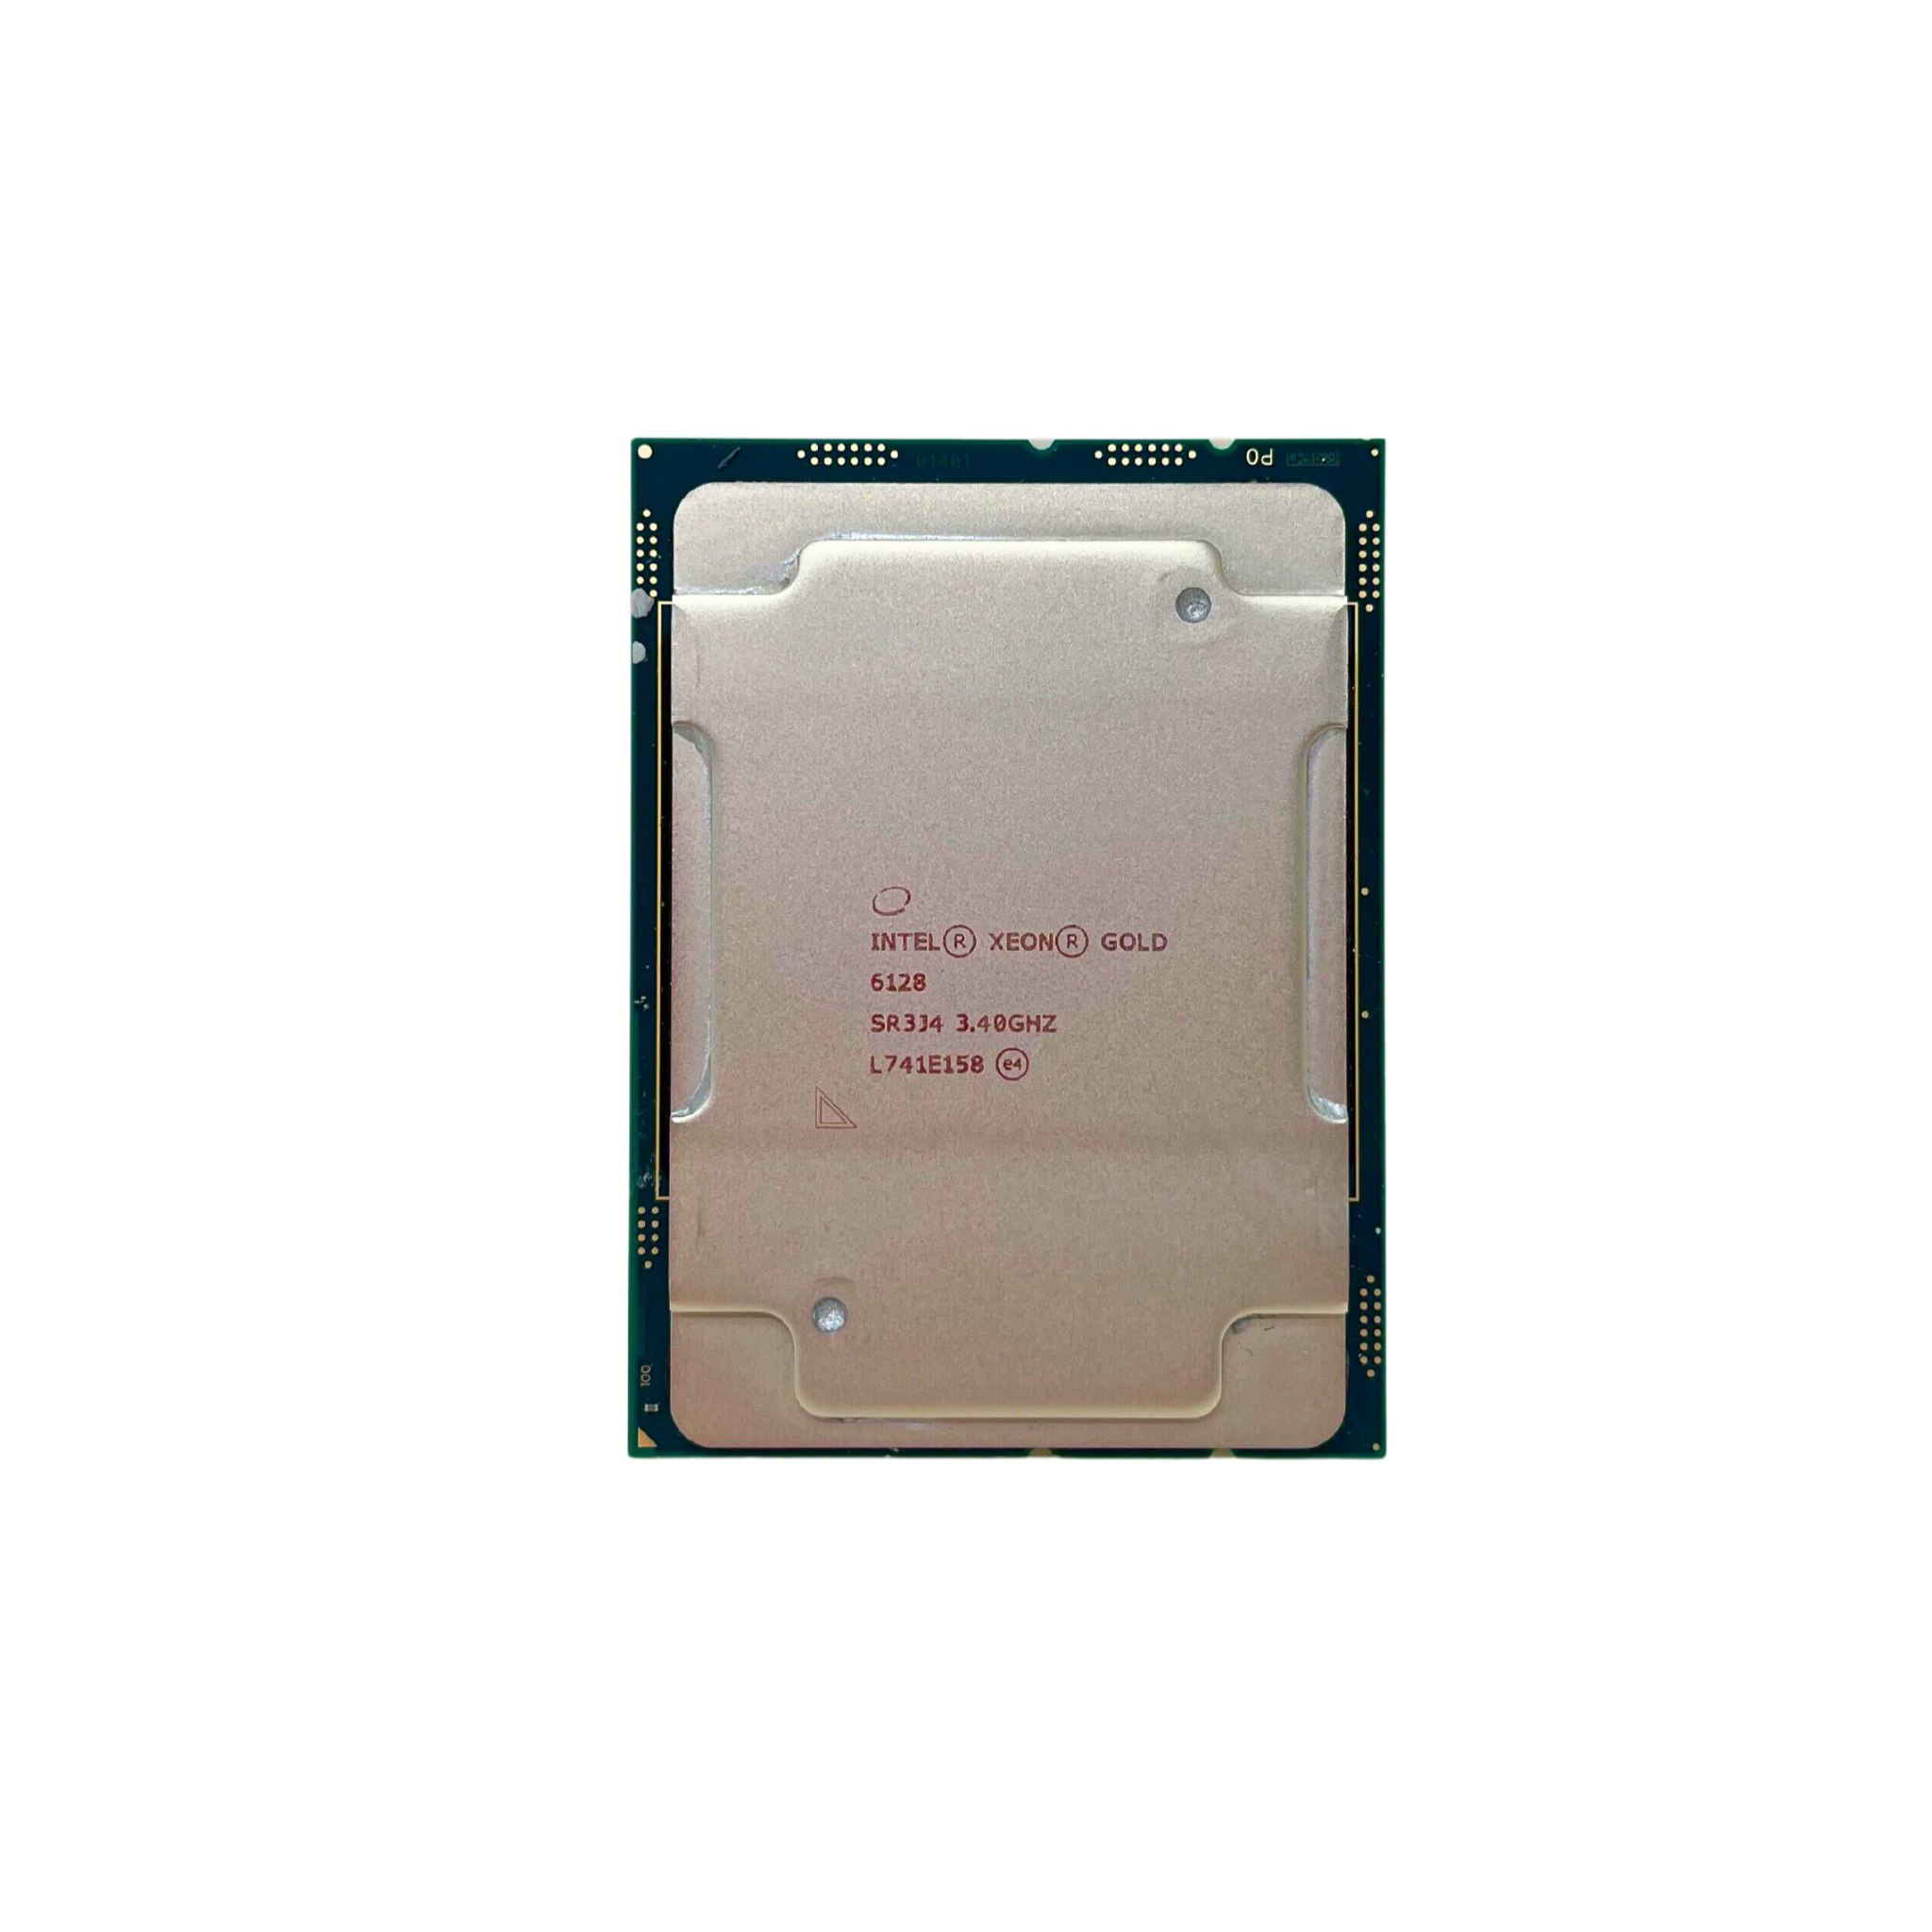 Intel Xeon Gold 6128 SR3J4 3.40ghz 6 Core Socket Fclga3647 Processor (Xeon Gold 6128)